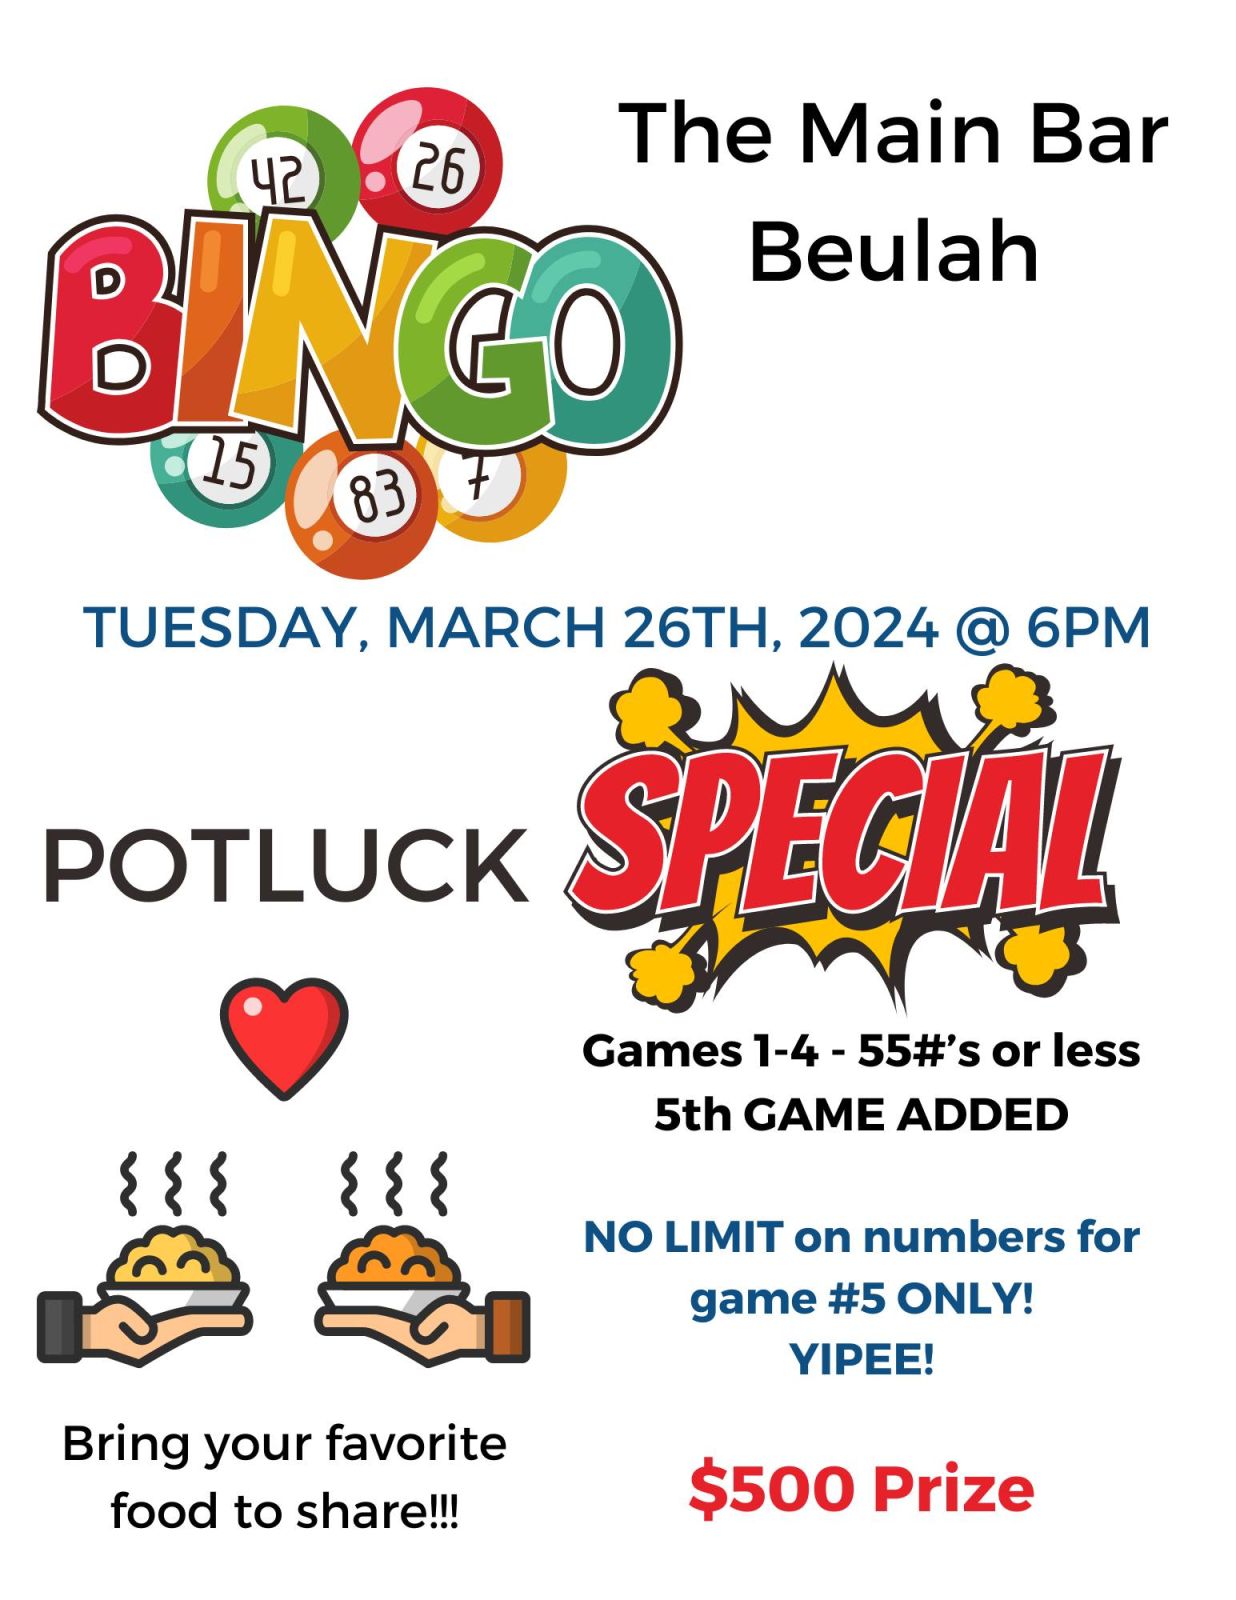 Event Promo Photo For Bingo & Potluck Special at the Main Bar